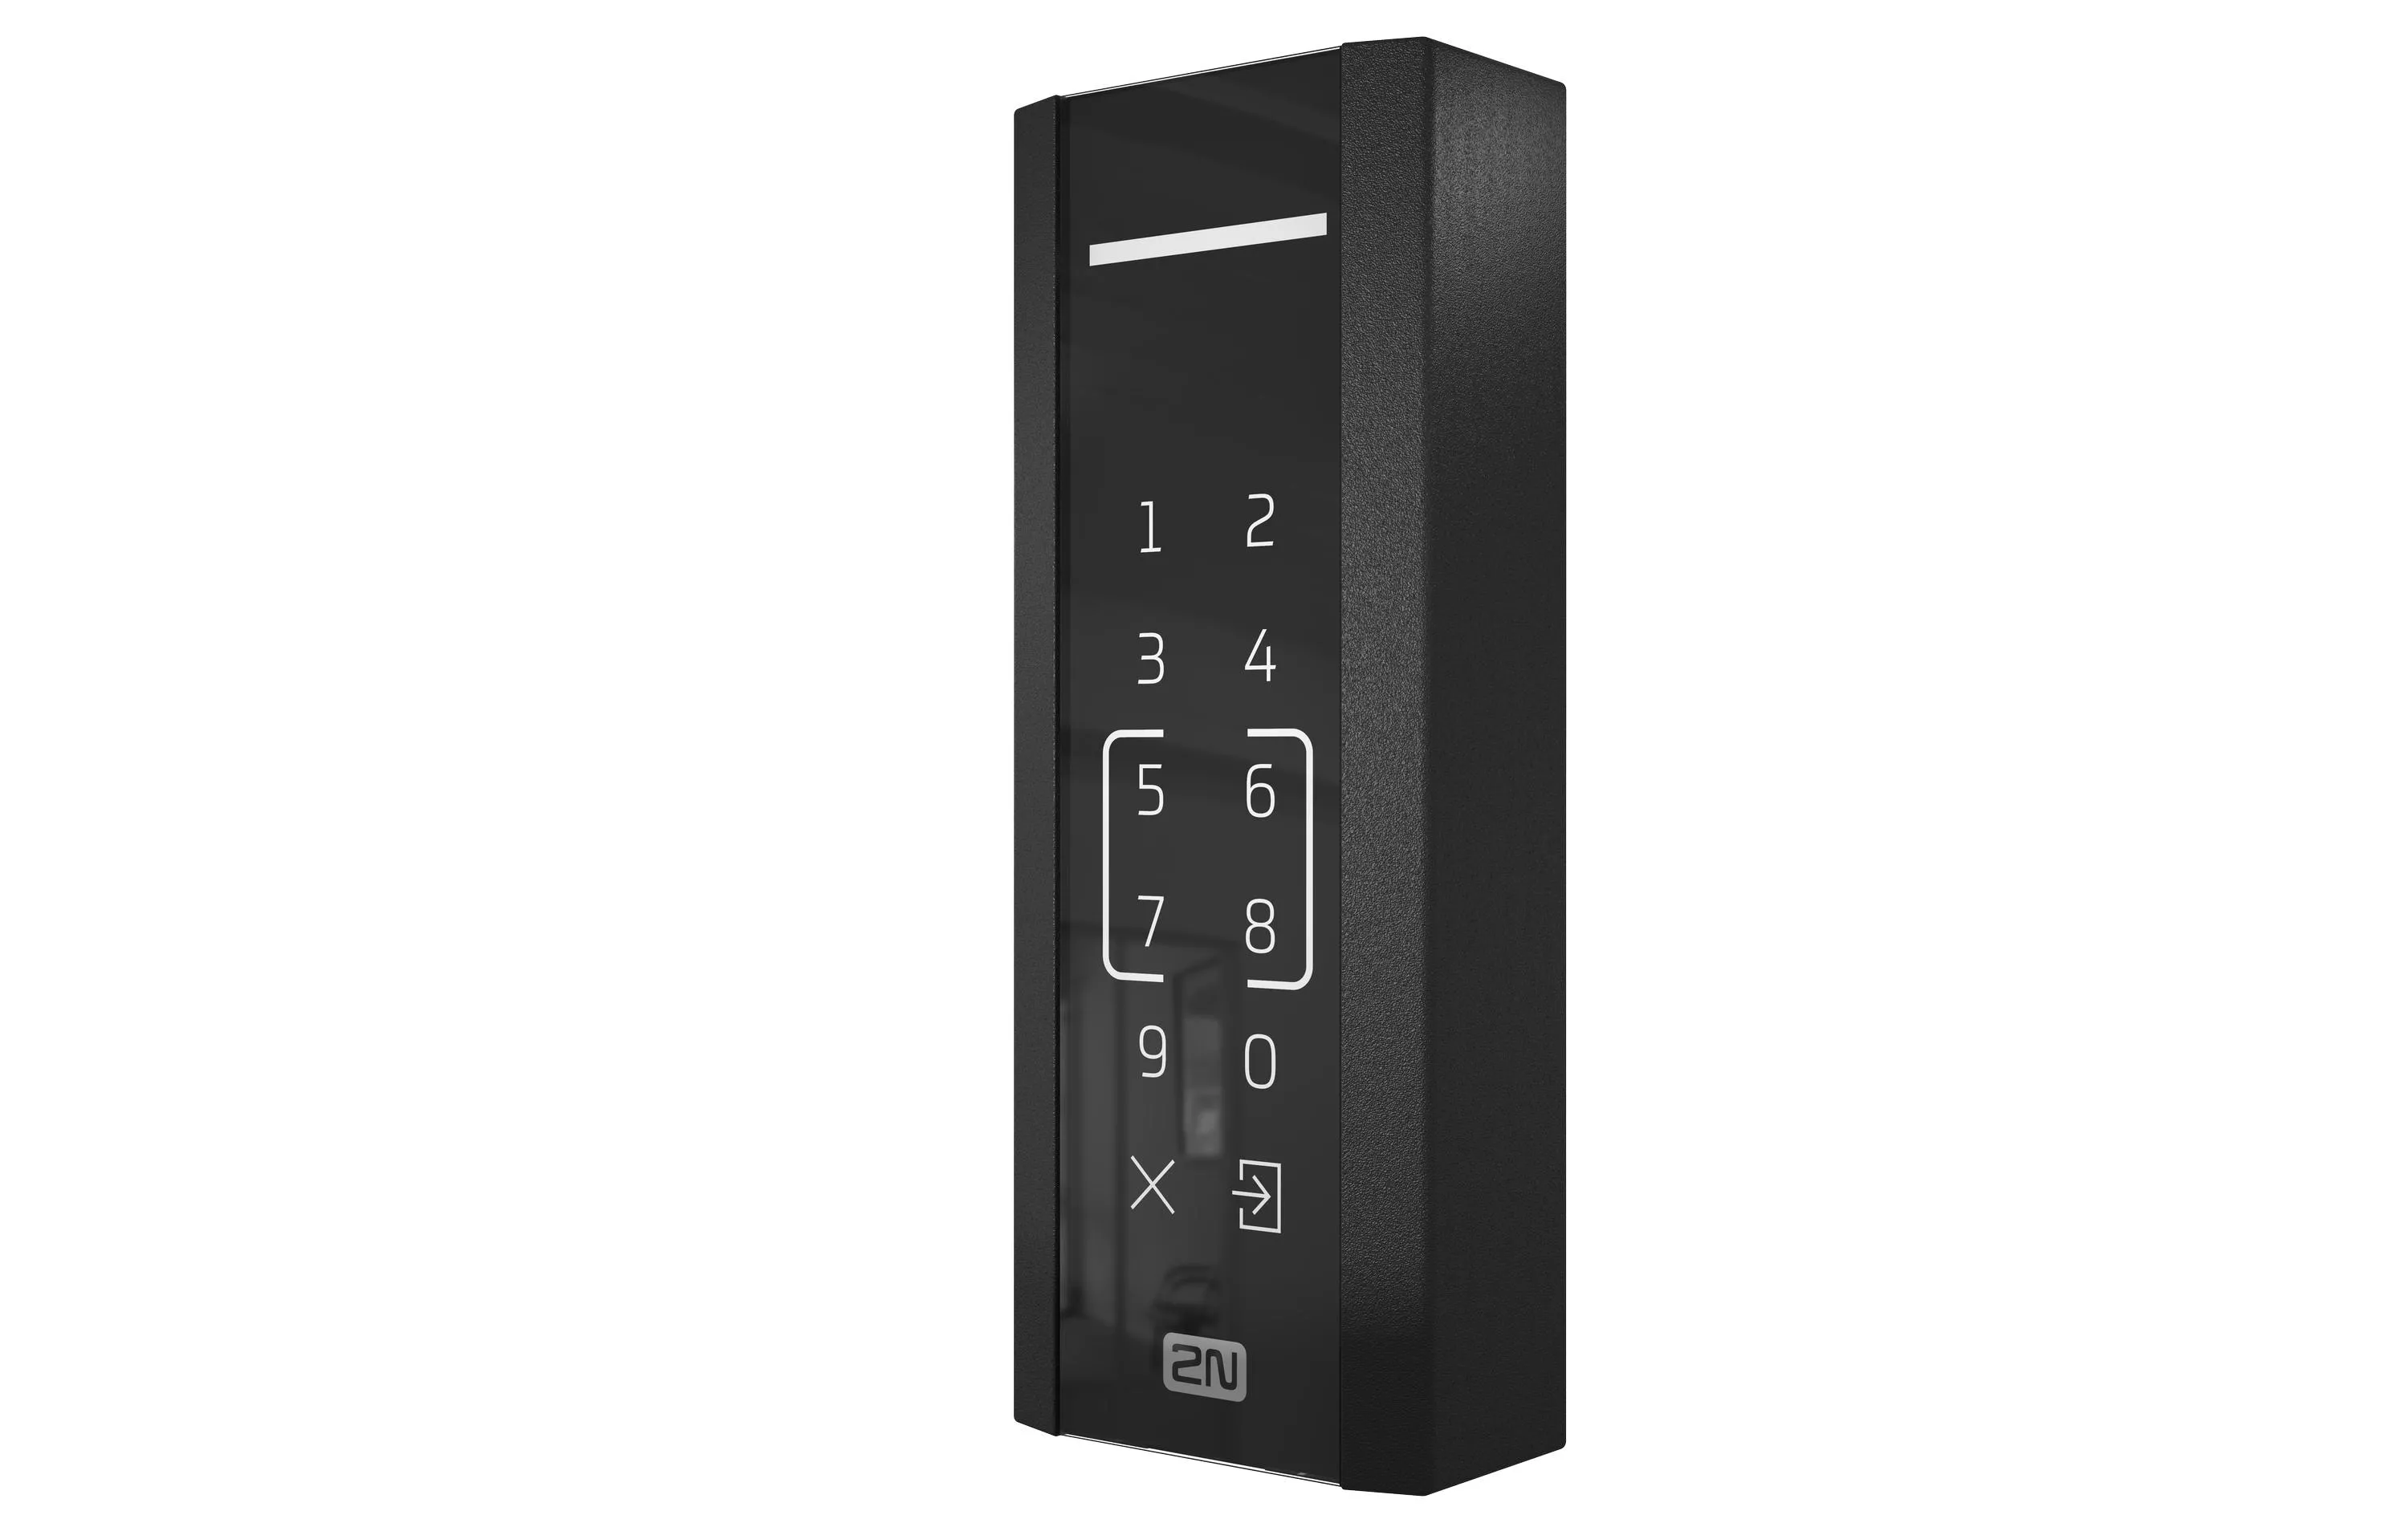 Access Unit M Touch Keypad & RFID